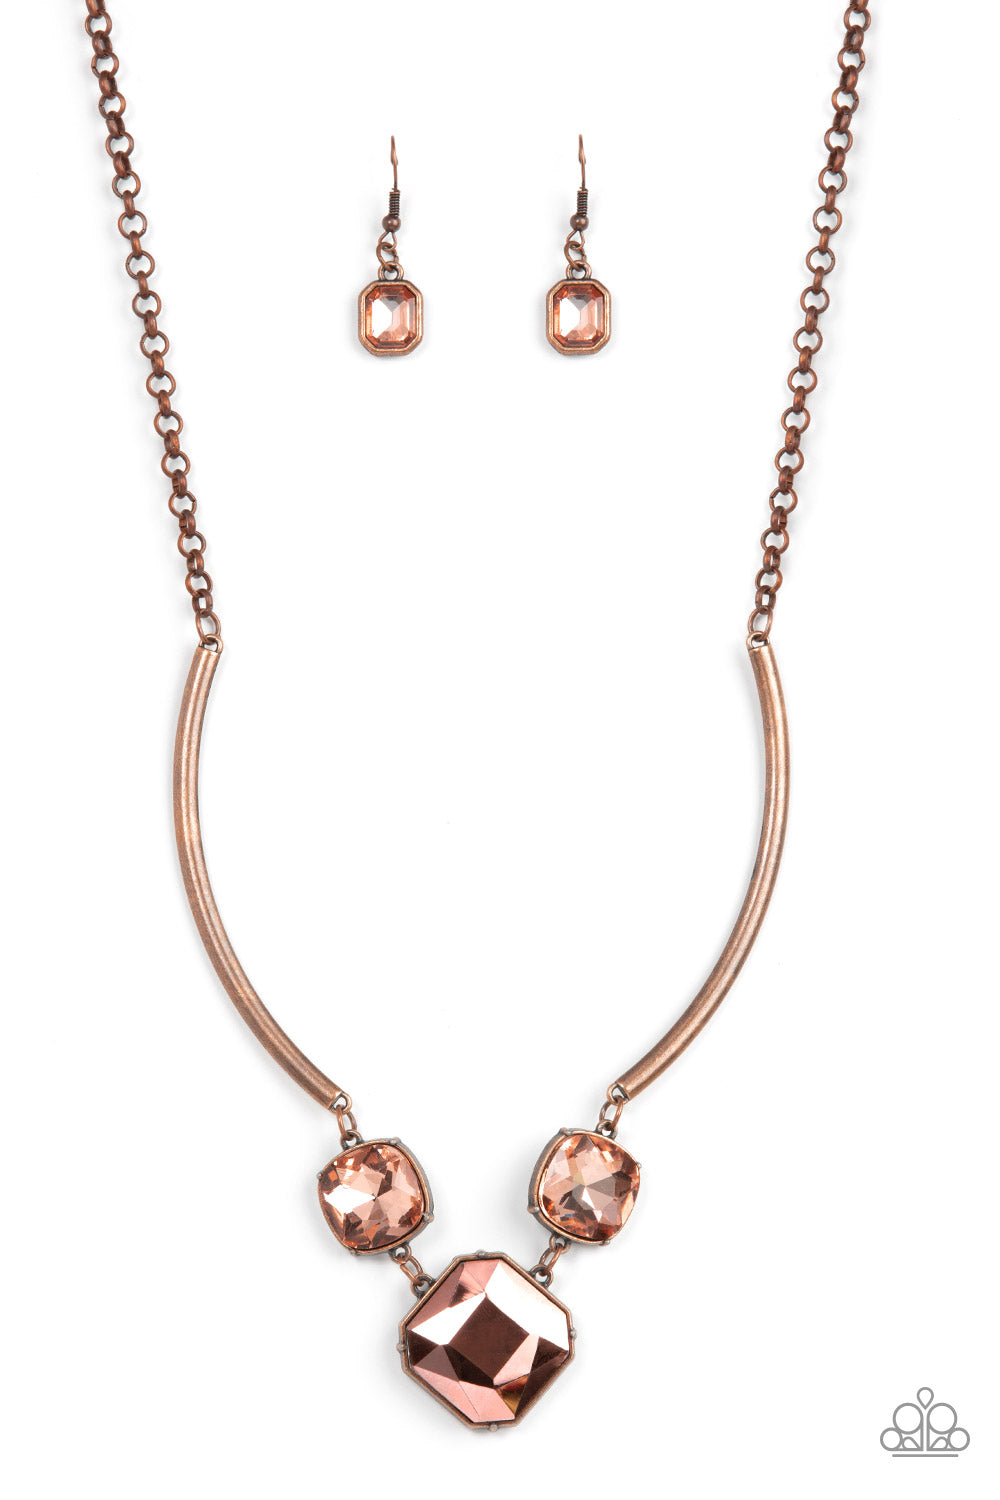 Divine IRIDESCENCE - Copper necklace B122